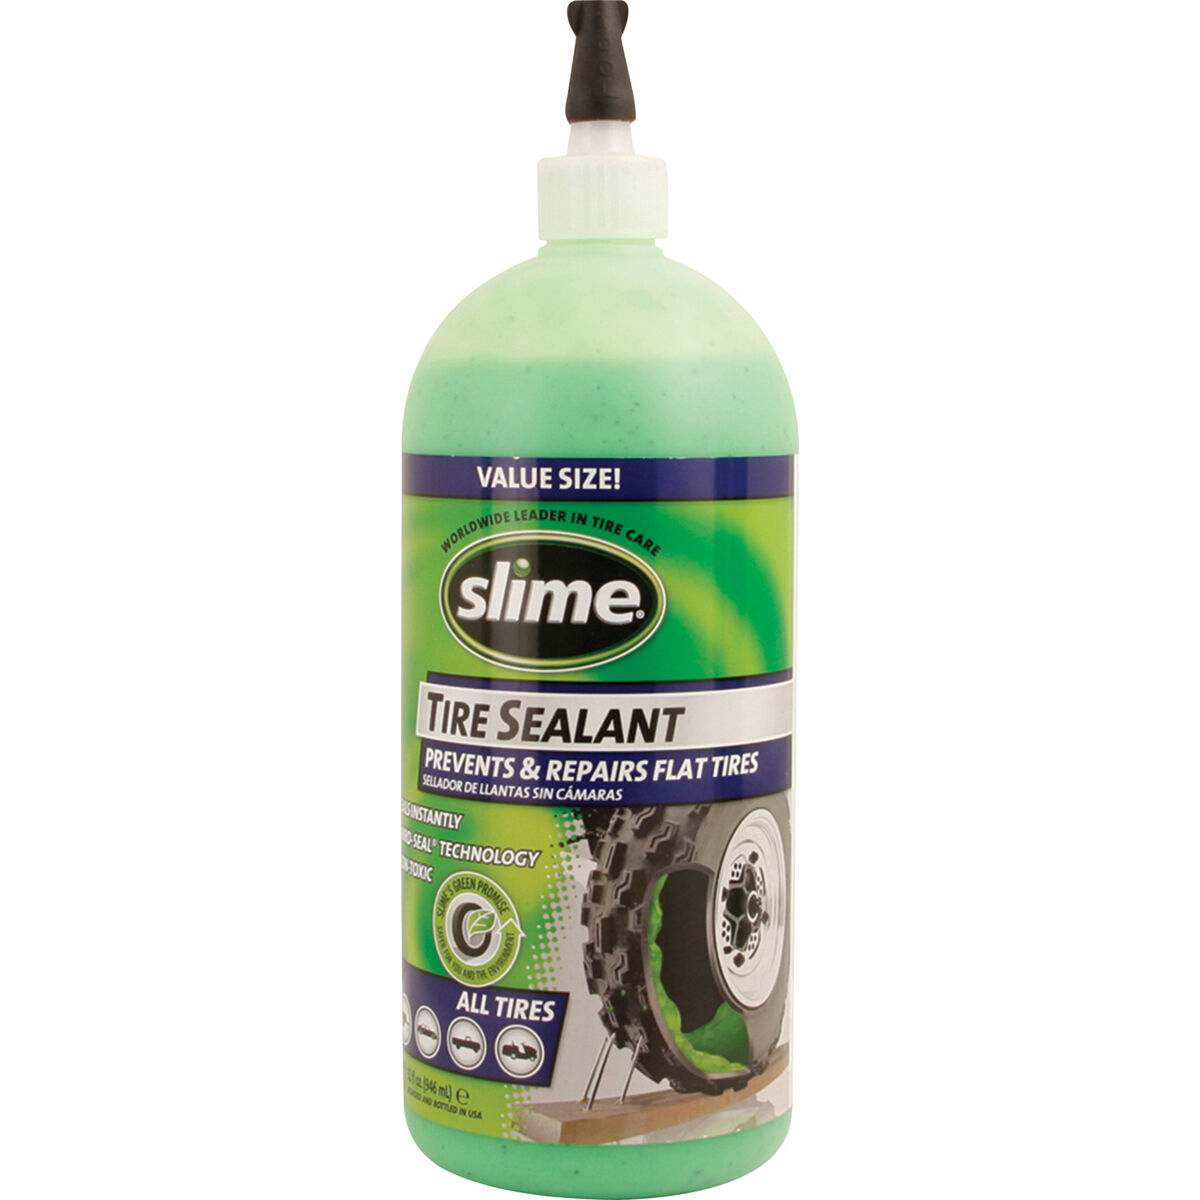 Best Tire Puncture Sealant, Slime Tire Sealant